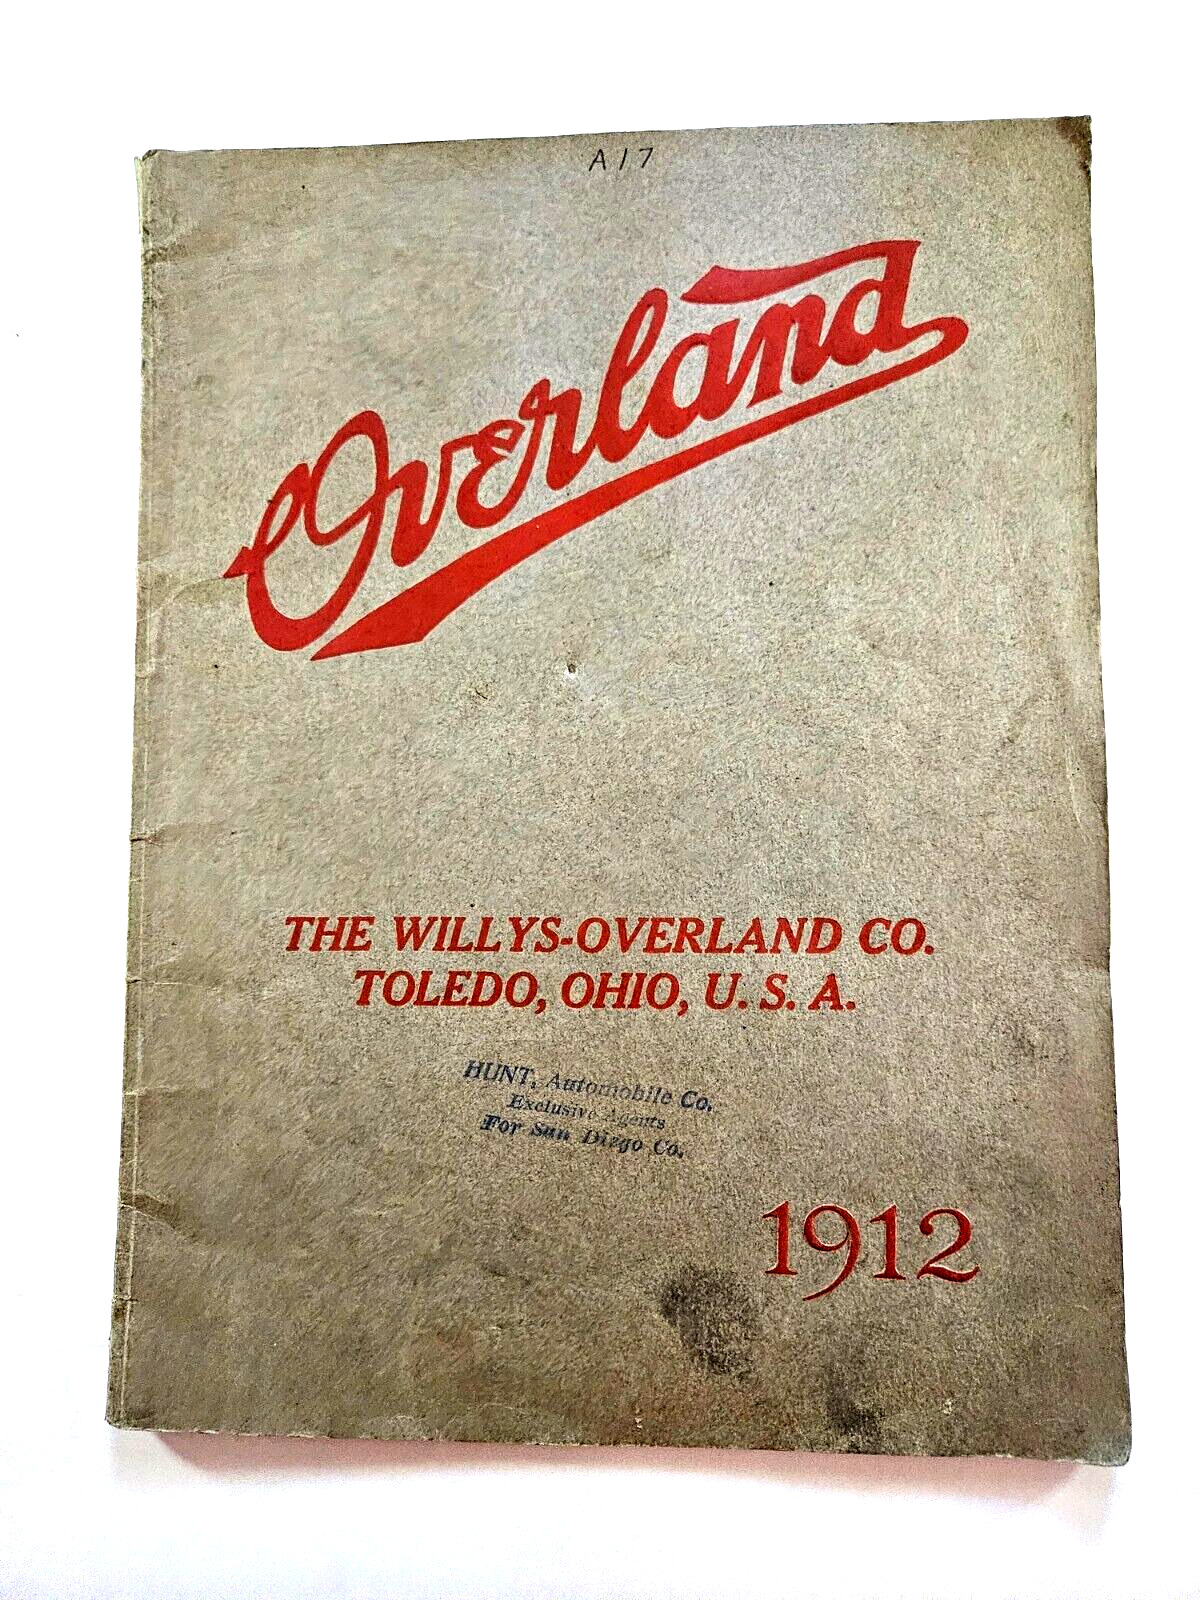 Overland The Willys-Overland Co. Toledo, Ohio, U.S.A. 64 Cars Antique 1912 Promo